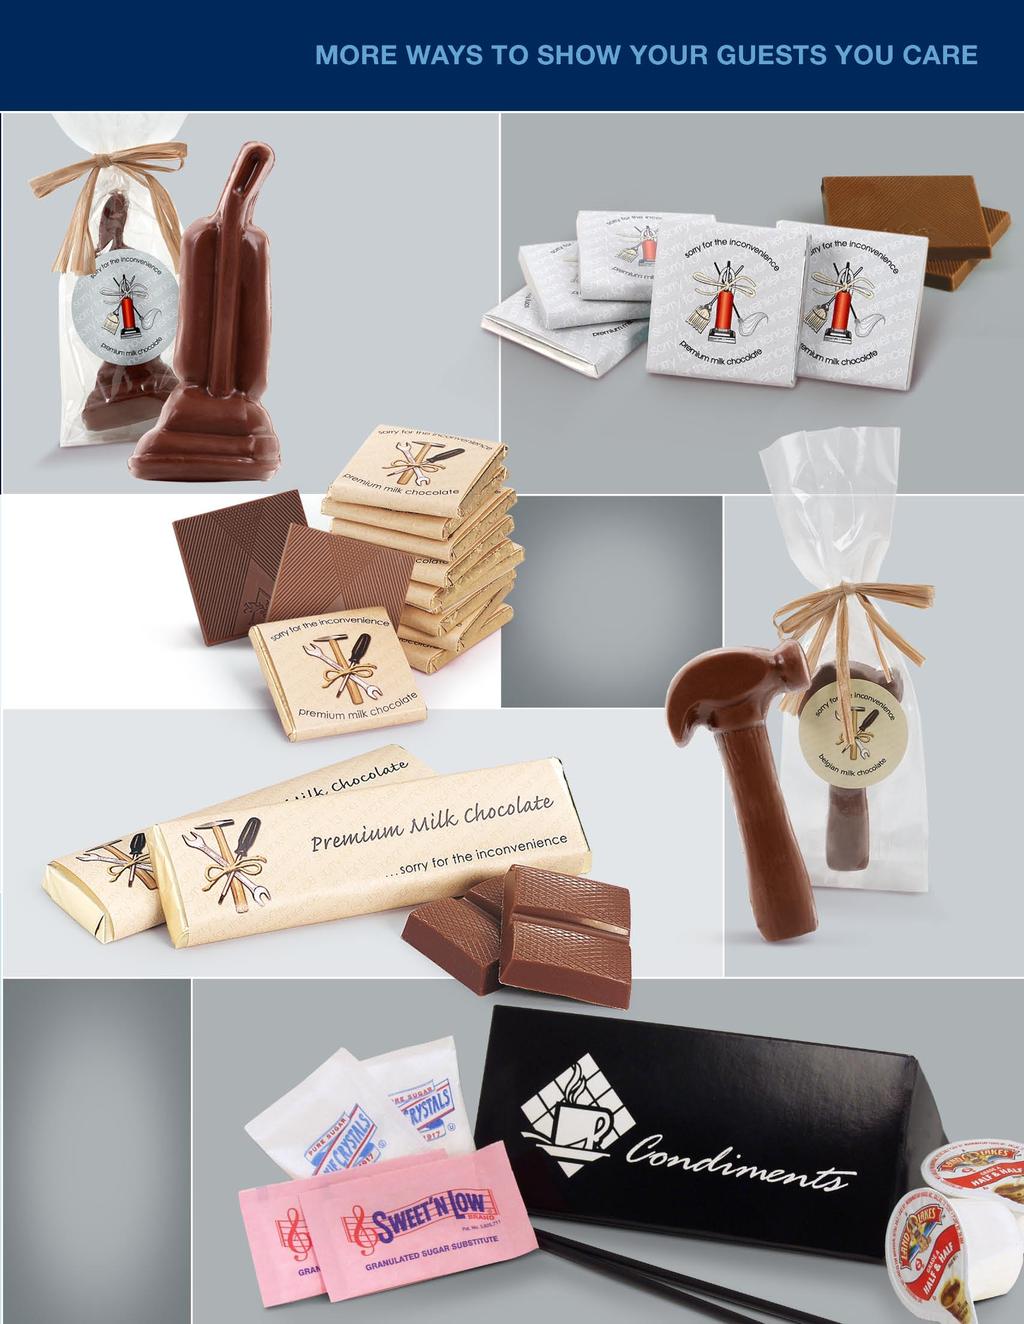 QQ > Creamy Milk Chocolate Vacuum in Cello Bag with Ribbon RR > Housekeeping Deluxe Creamy Milk Chocolate Squares - 1.75 master case - $0.209 each 1440 per case junior case - $0.